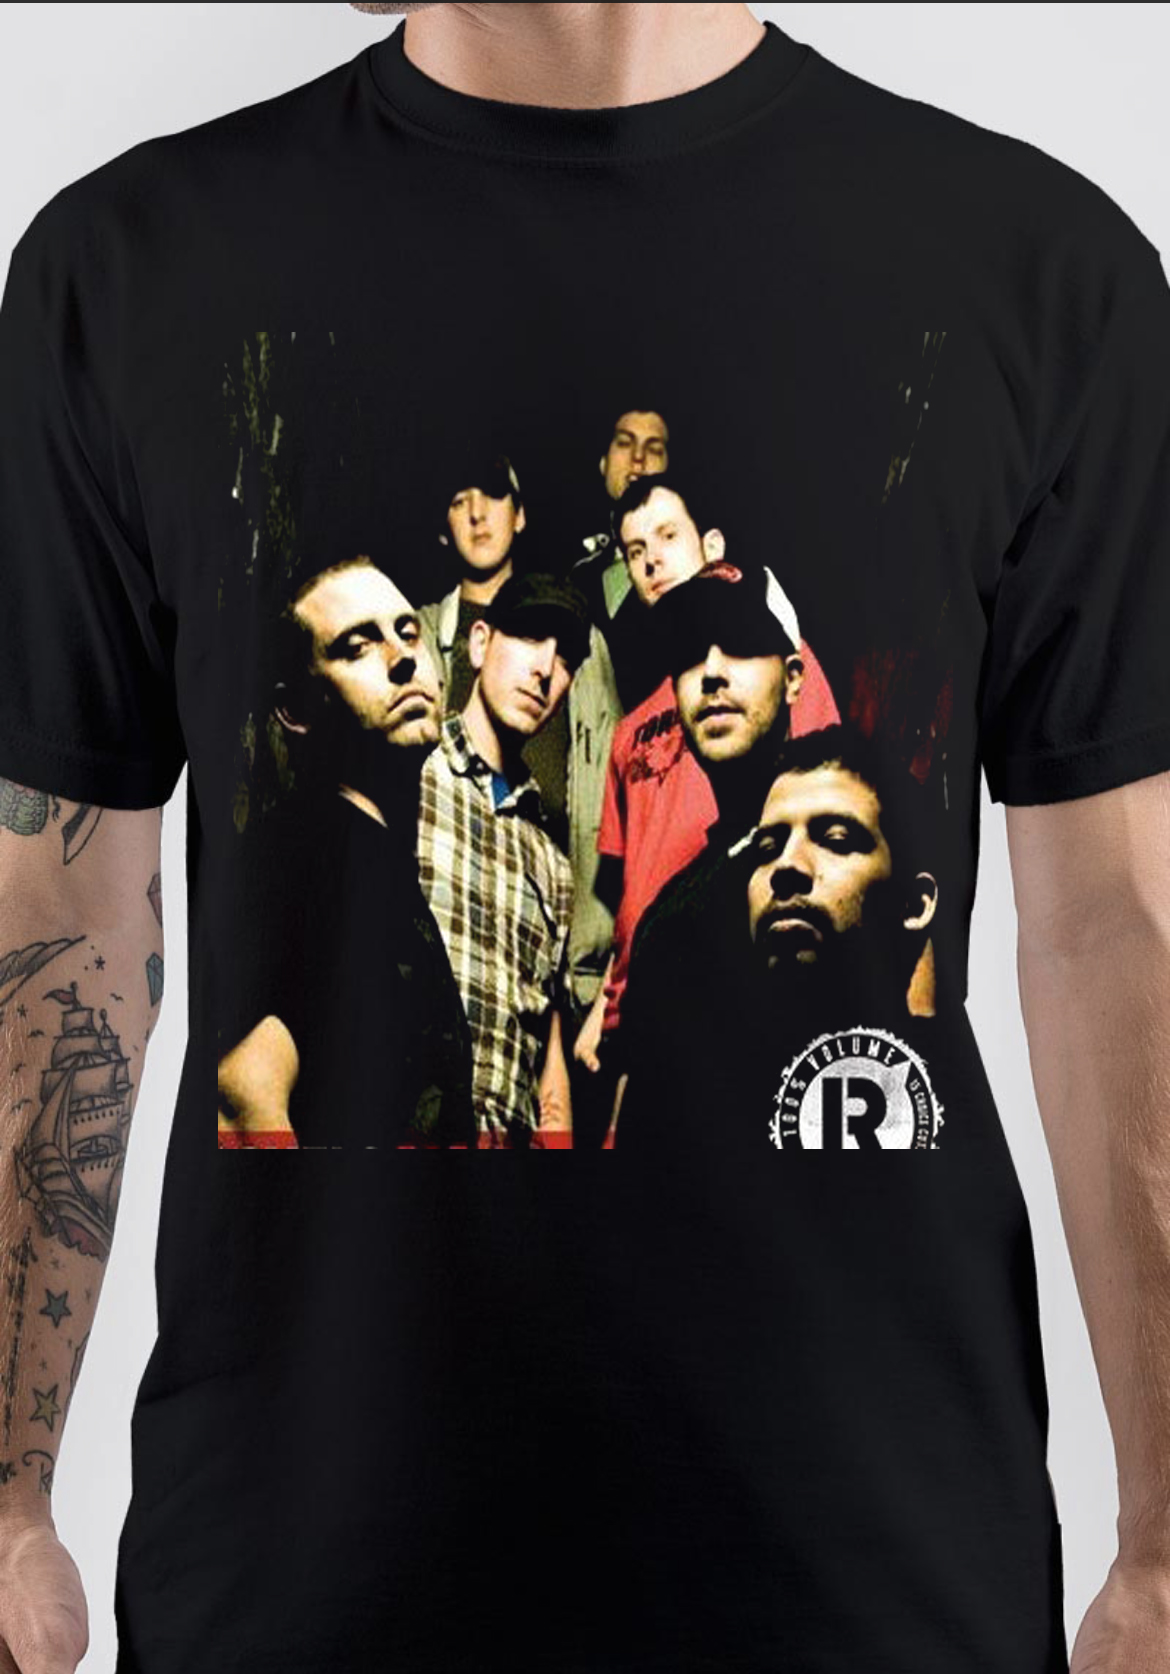 Shels Band T-Shirt And Merchandise